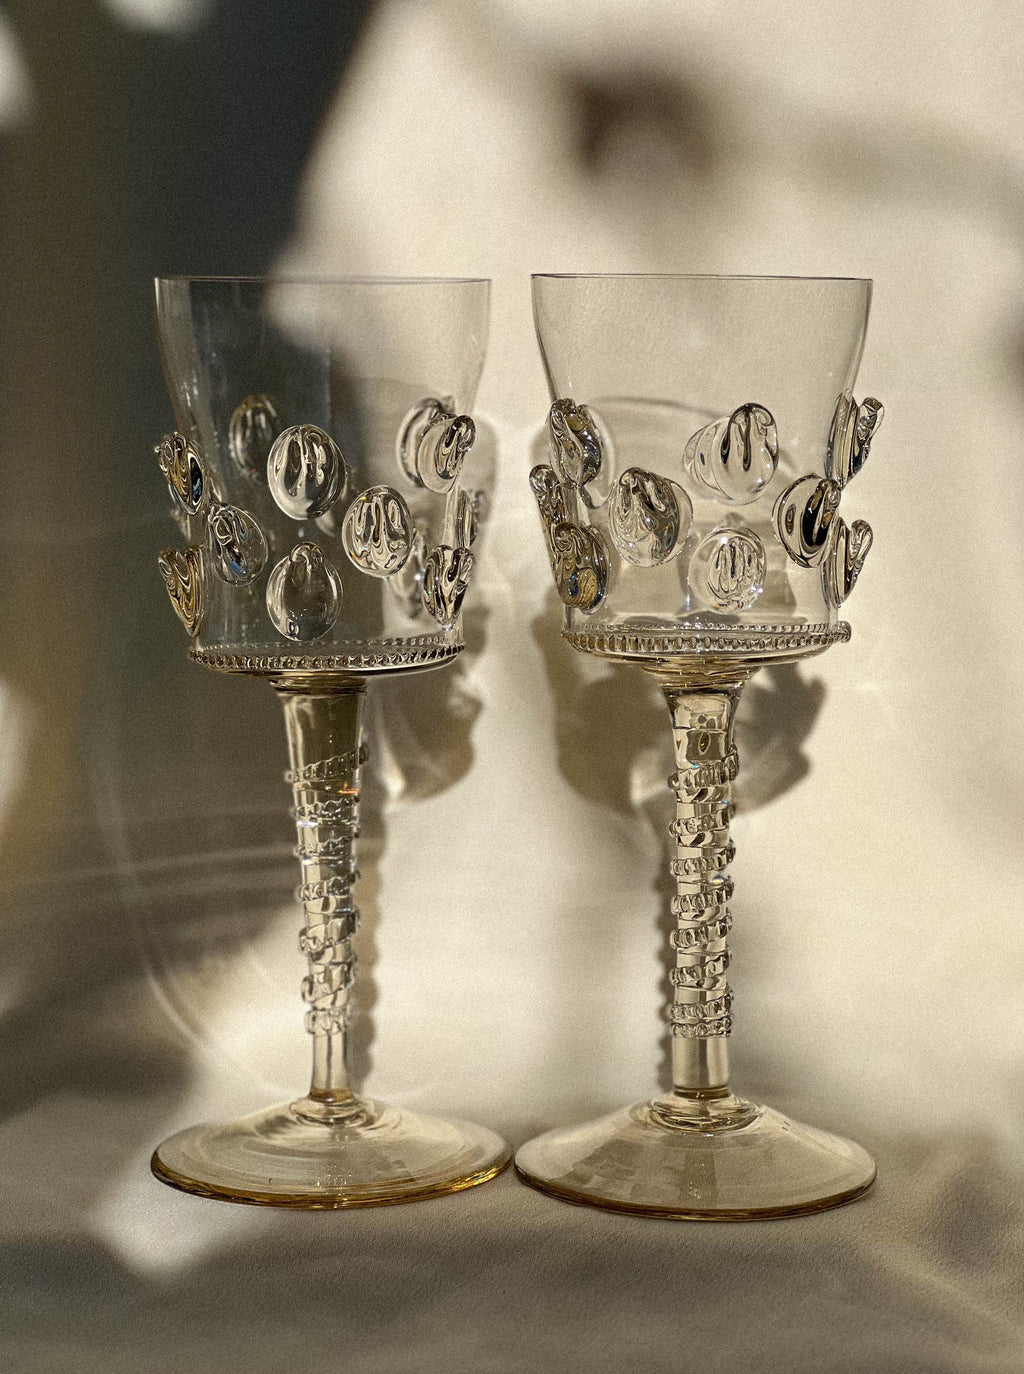 VinoSculpt Wine Glass Gift Collection - Eye of Art